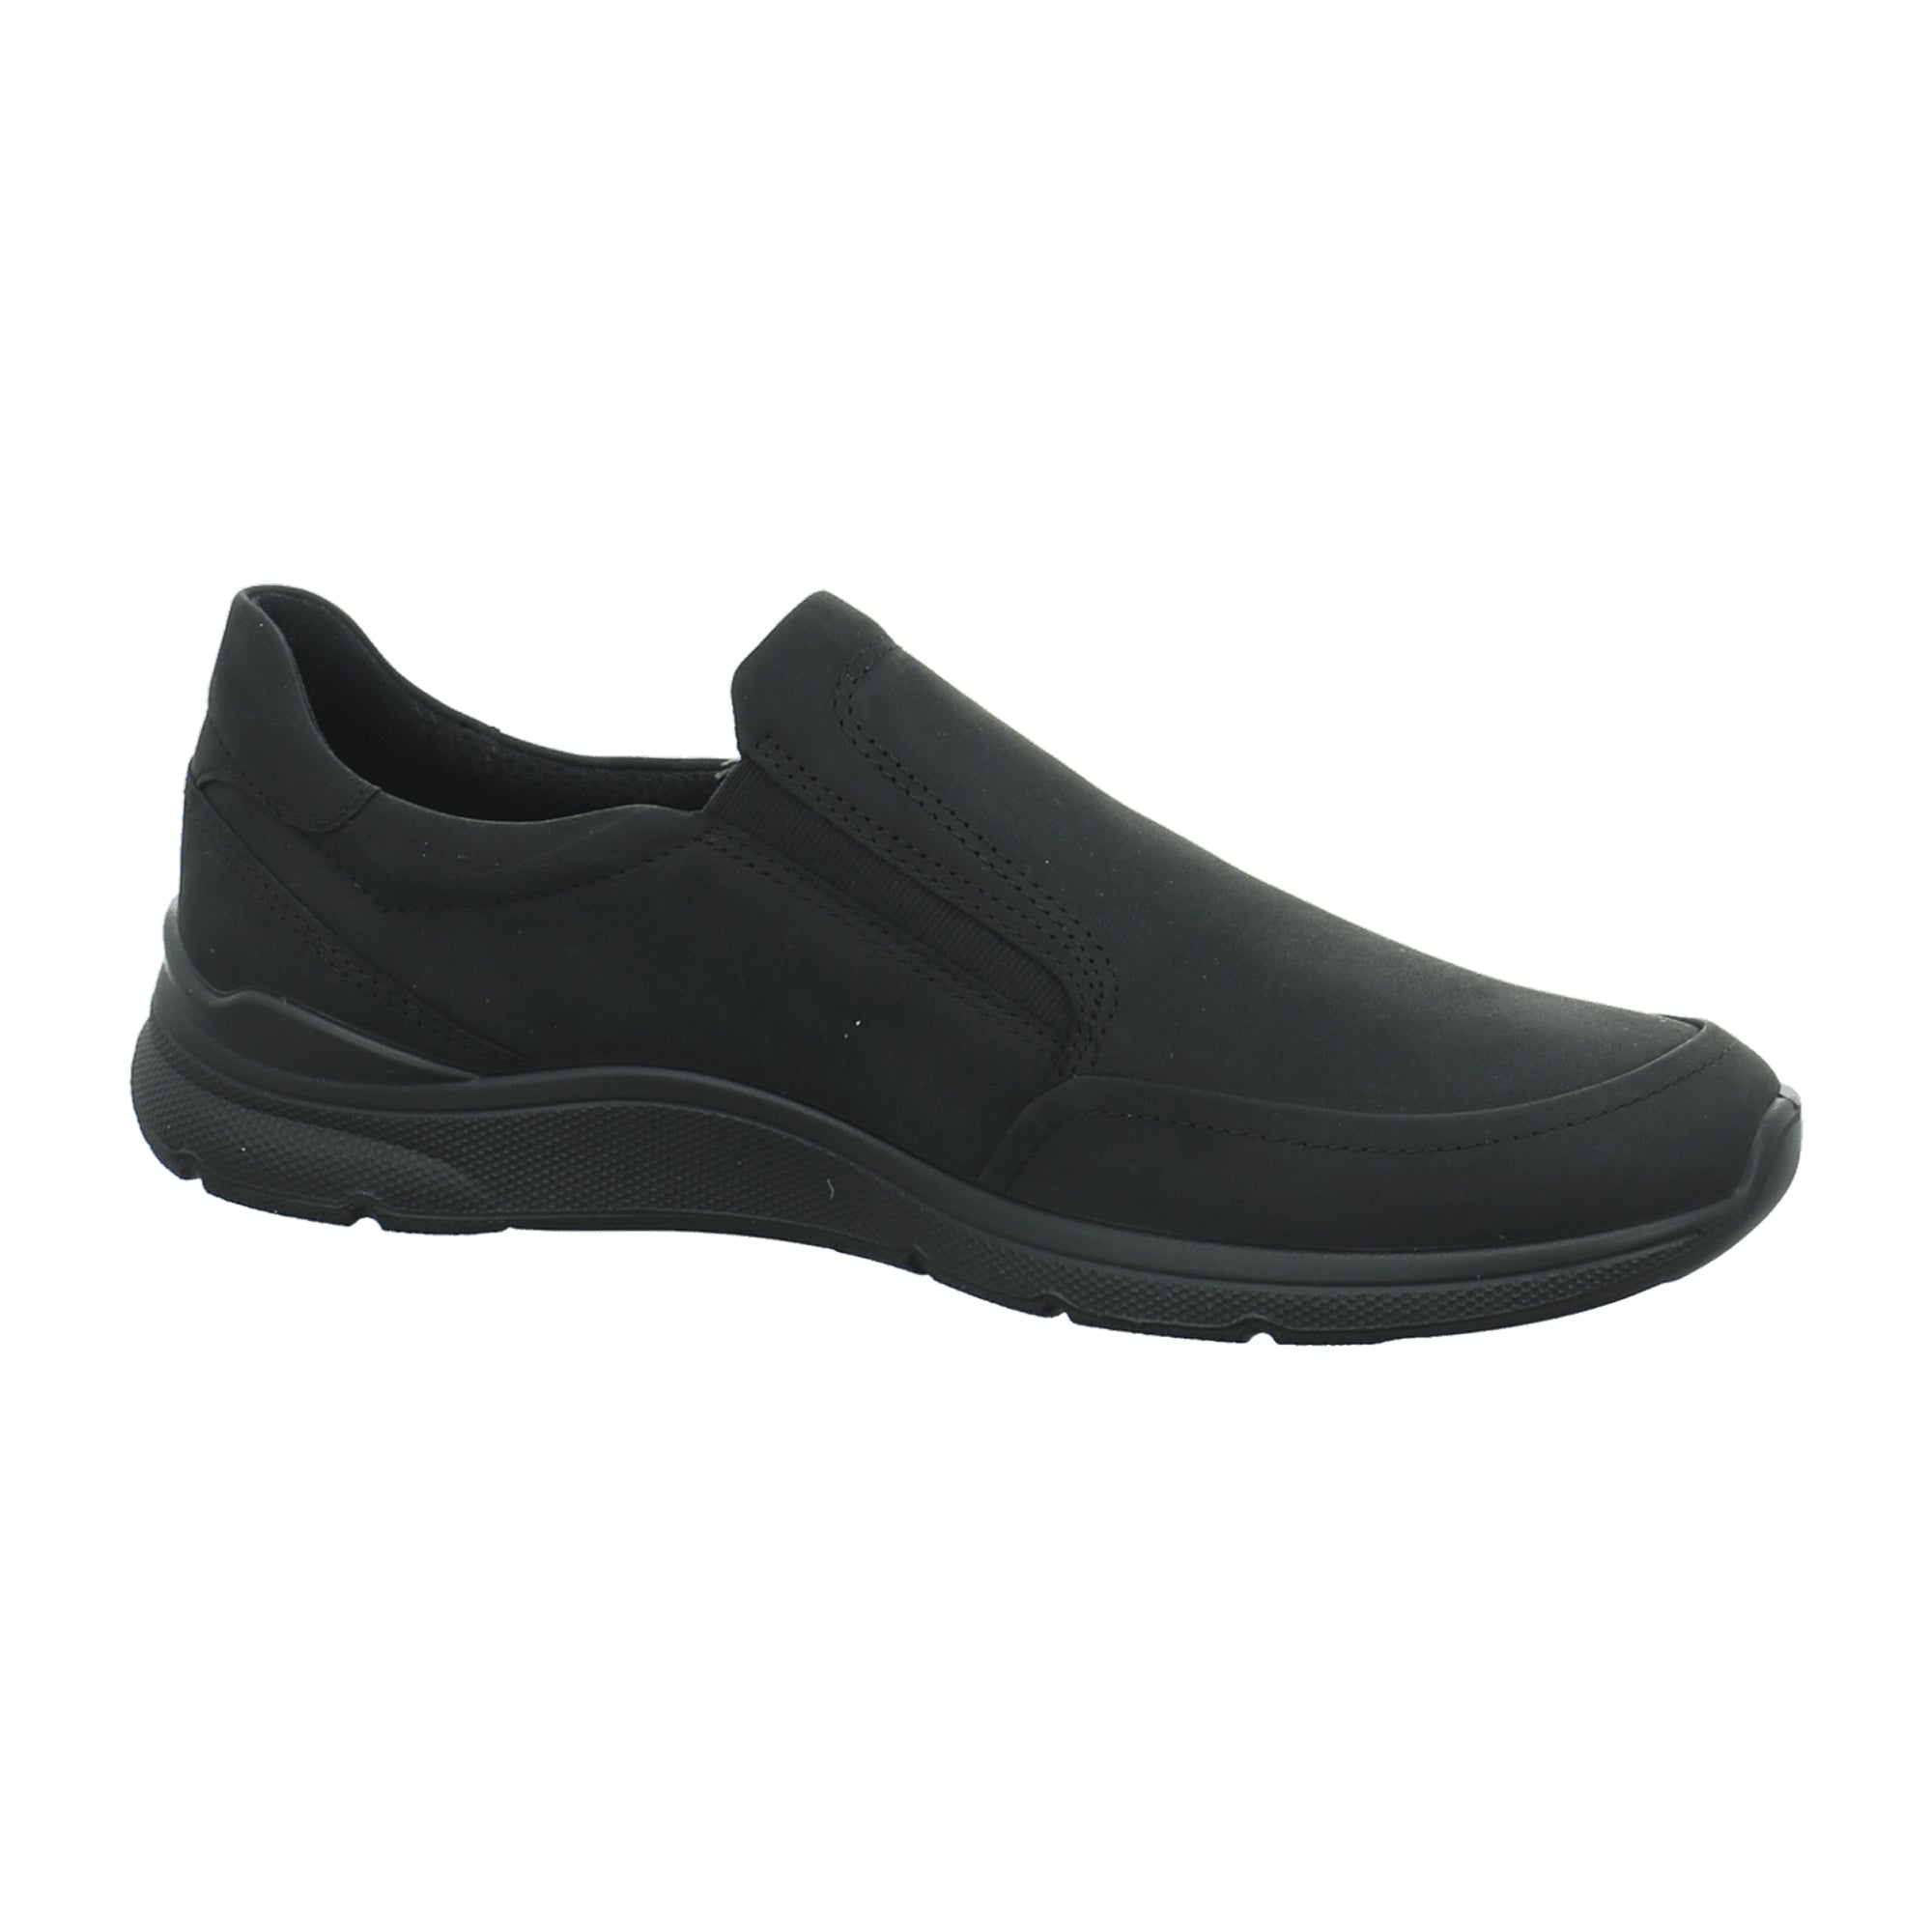 Ecco Irving Men's Black Casual Shoes - Comfortable & Durable